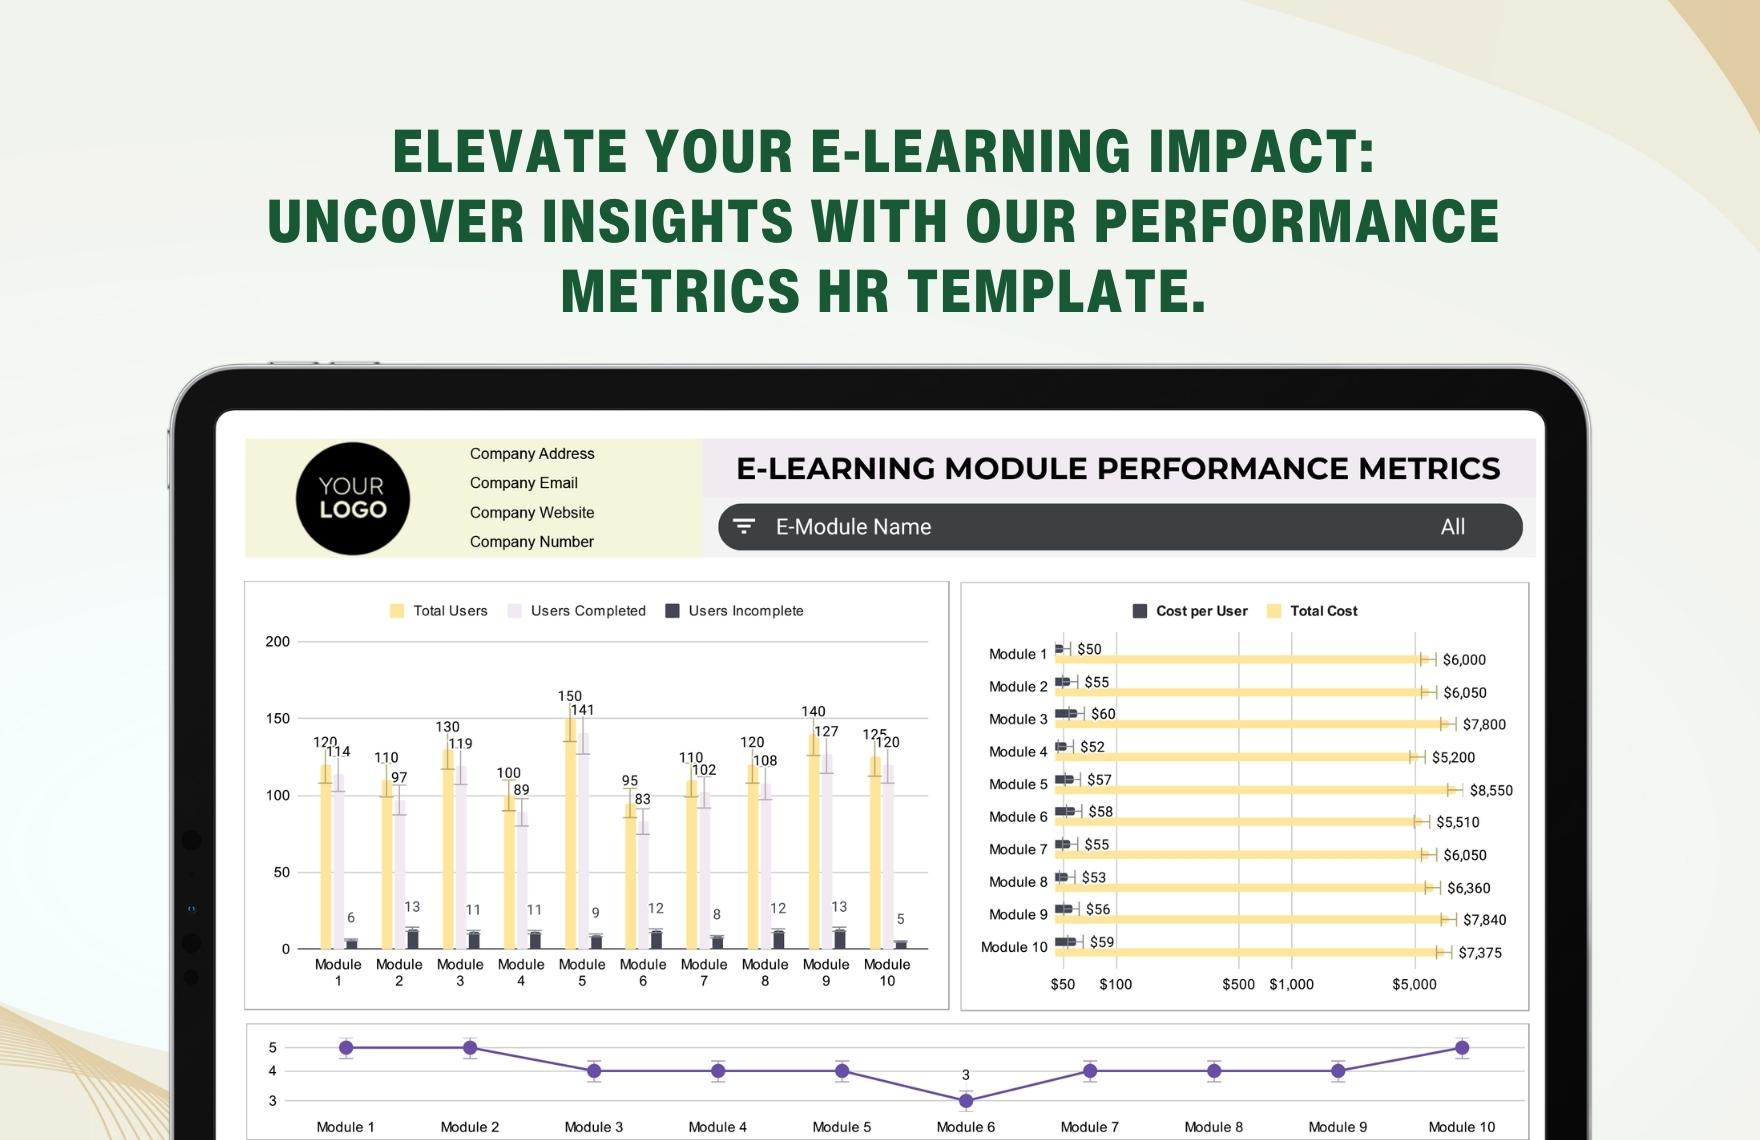 E-learning Module Performance Metrics HR Template